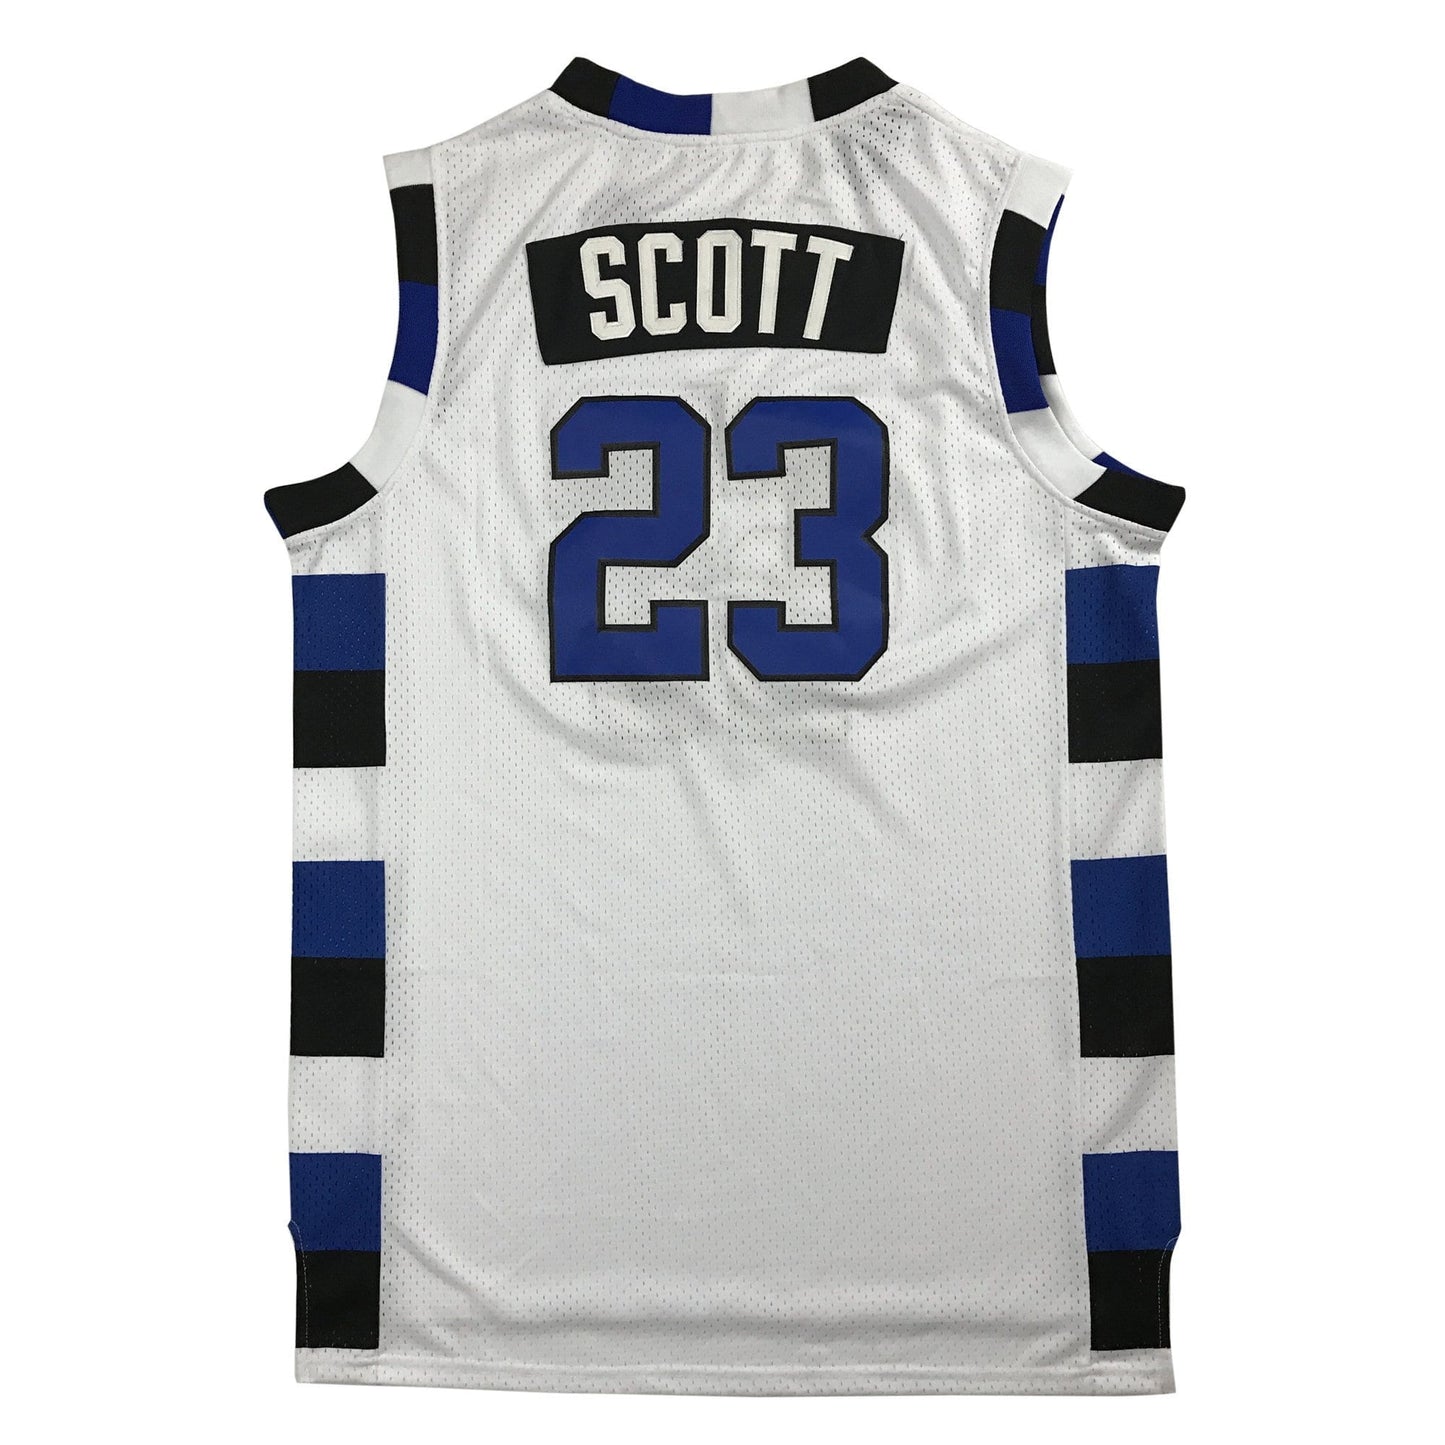 Nathan Scott #23 One Tree Hill Ravens Basketball Jersey